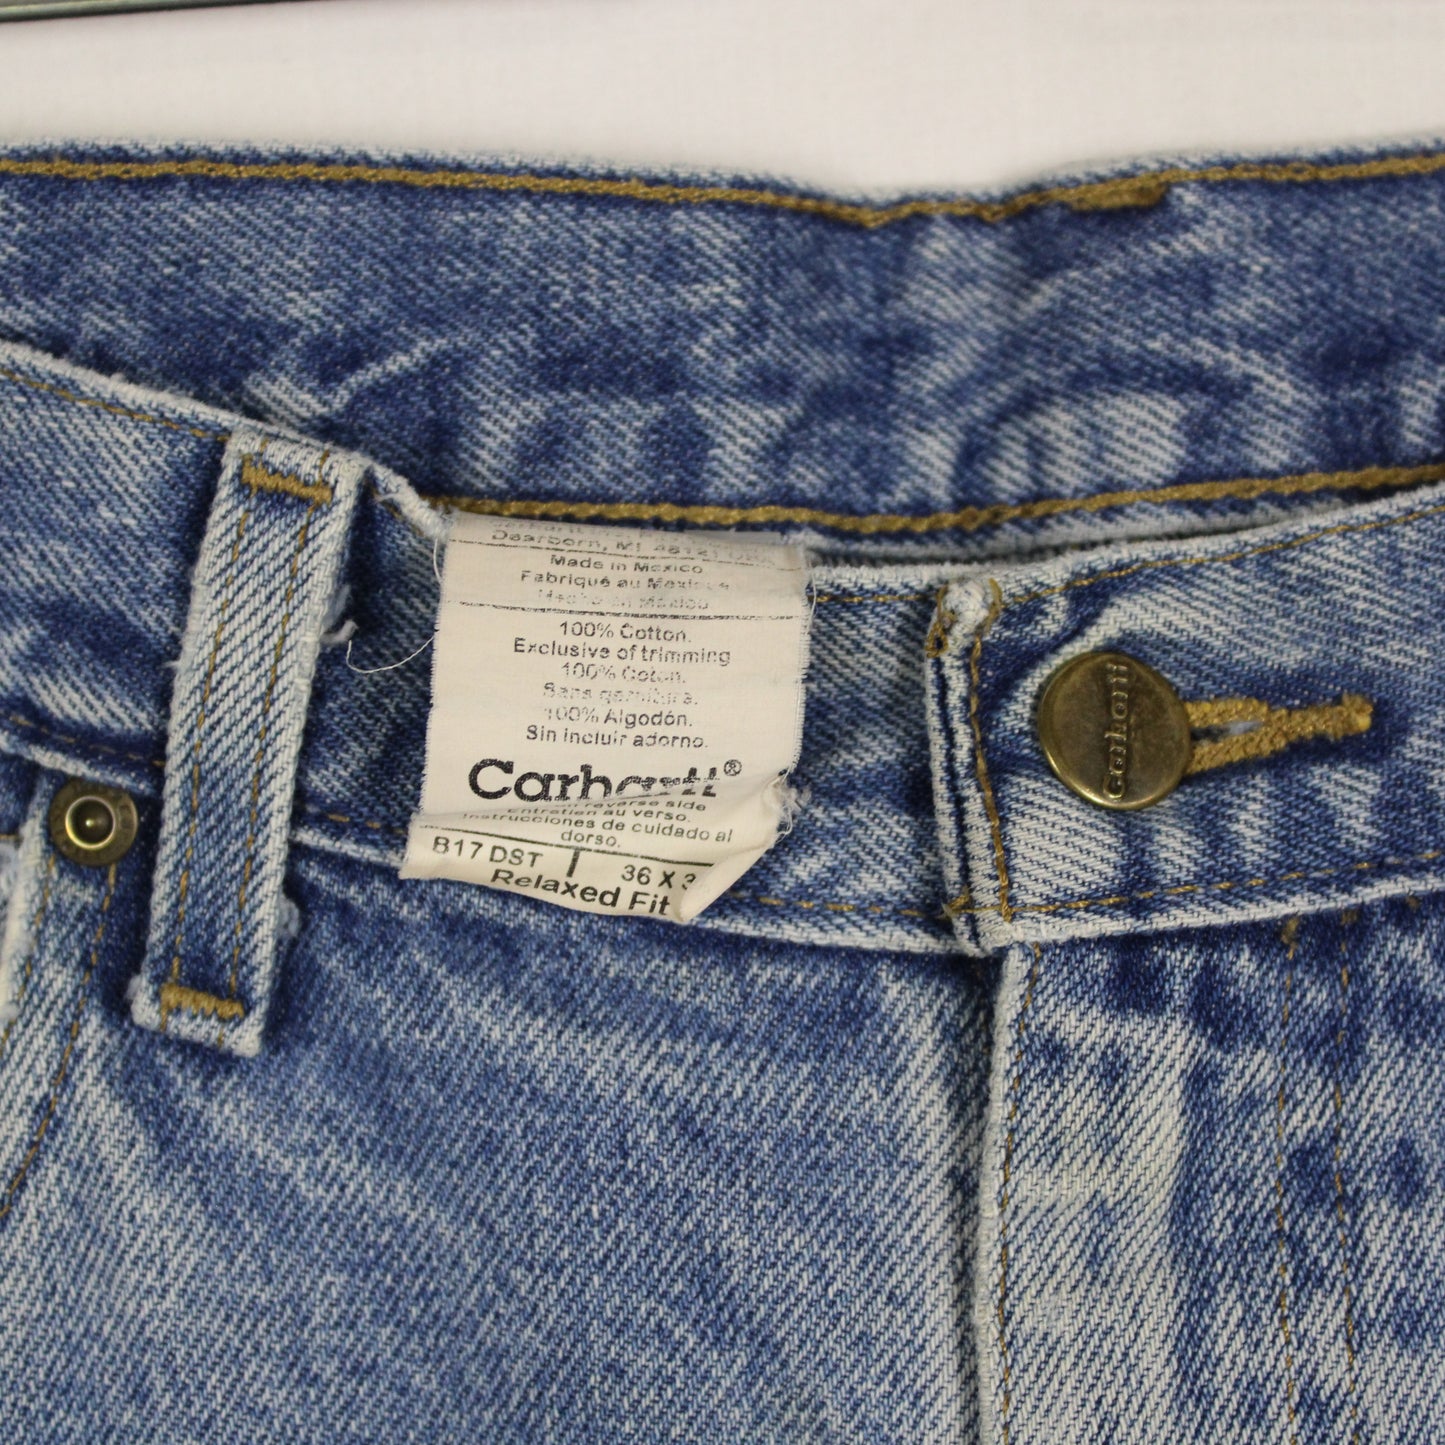 Vintage Carhartt Carpenter Jeans - 36x32